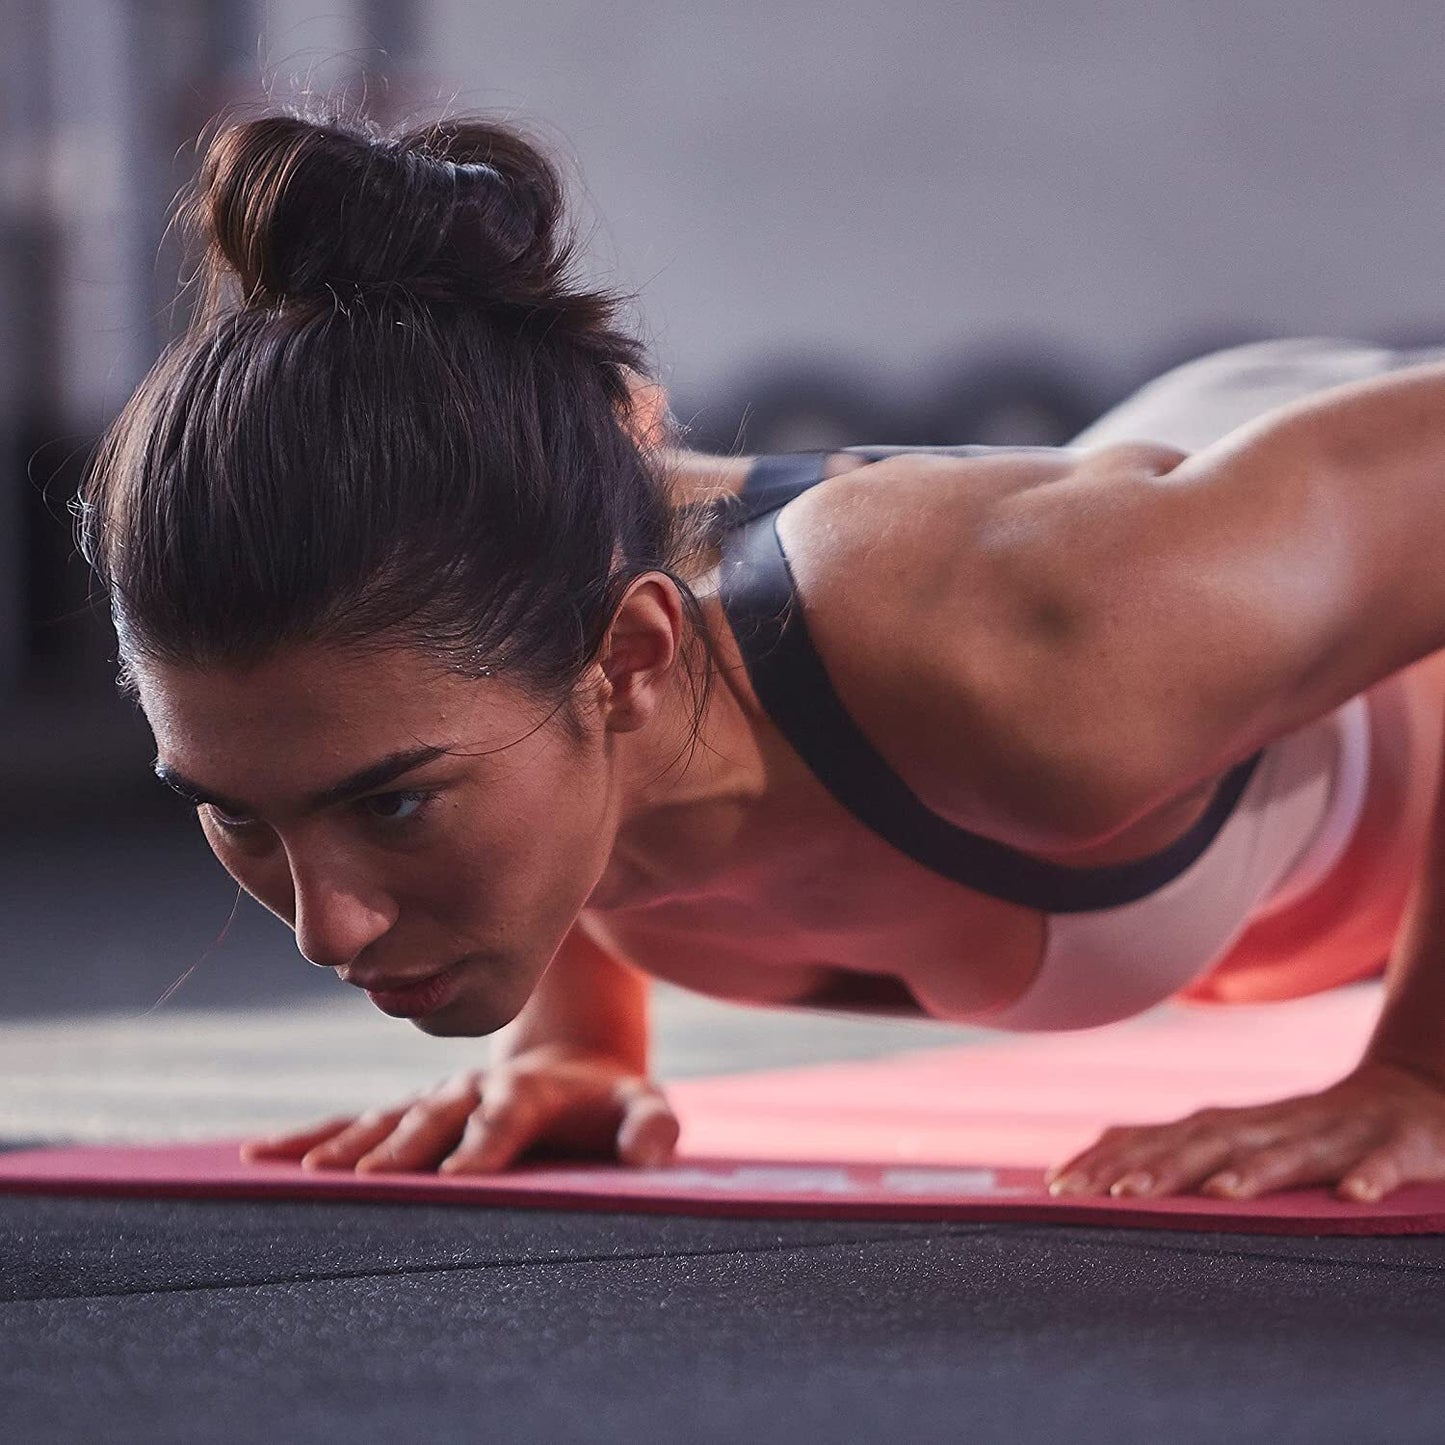 Adidas Fitness Mat 7mm Exercise Training Floor Gym Yoga Judo Pilates  - Red